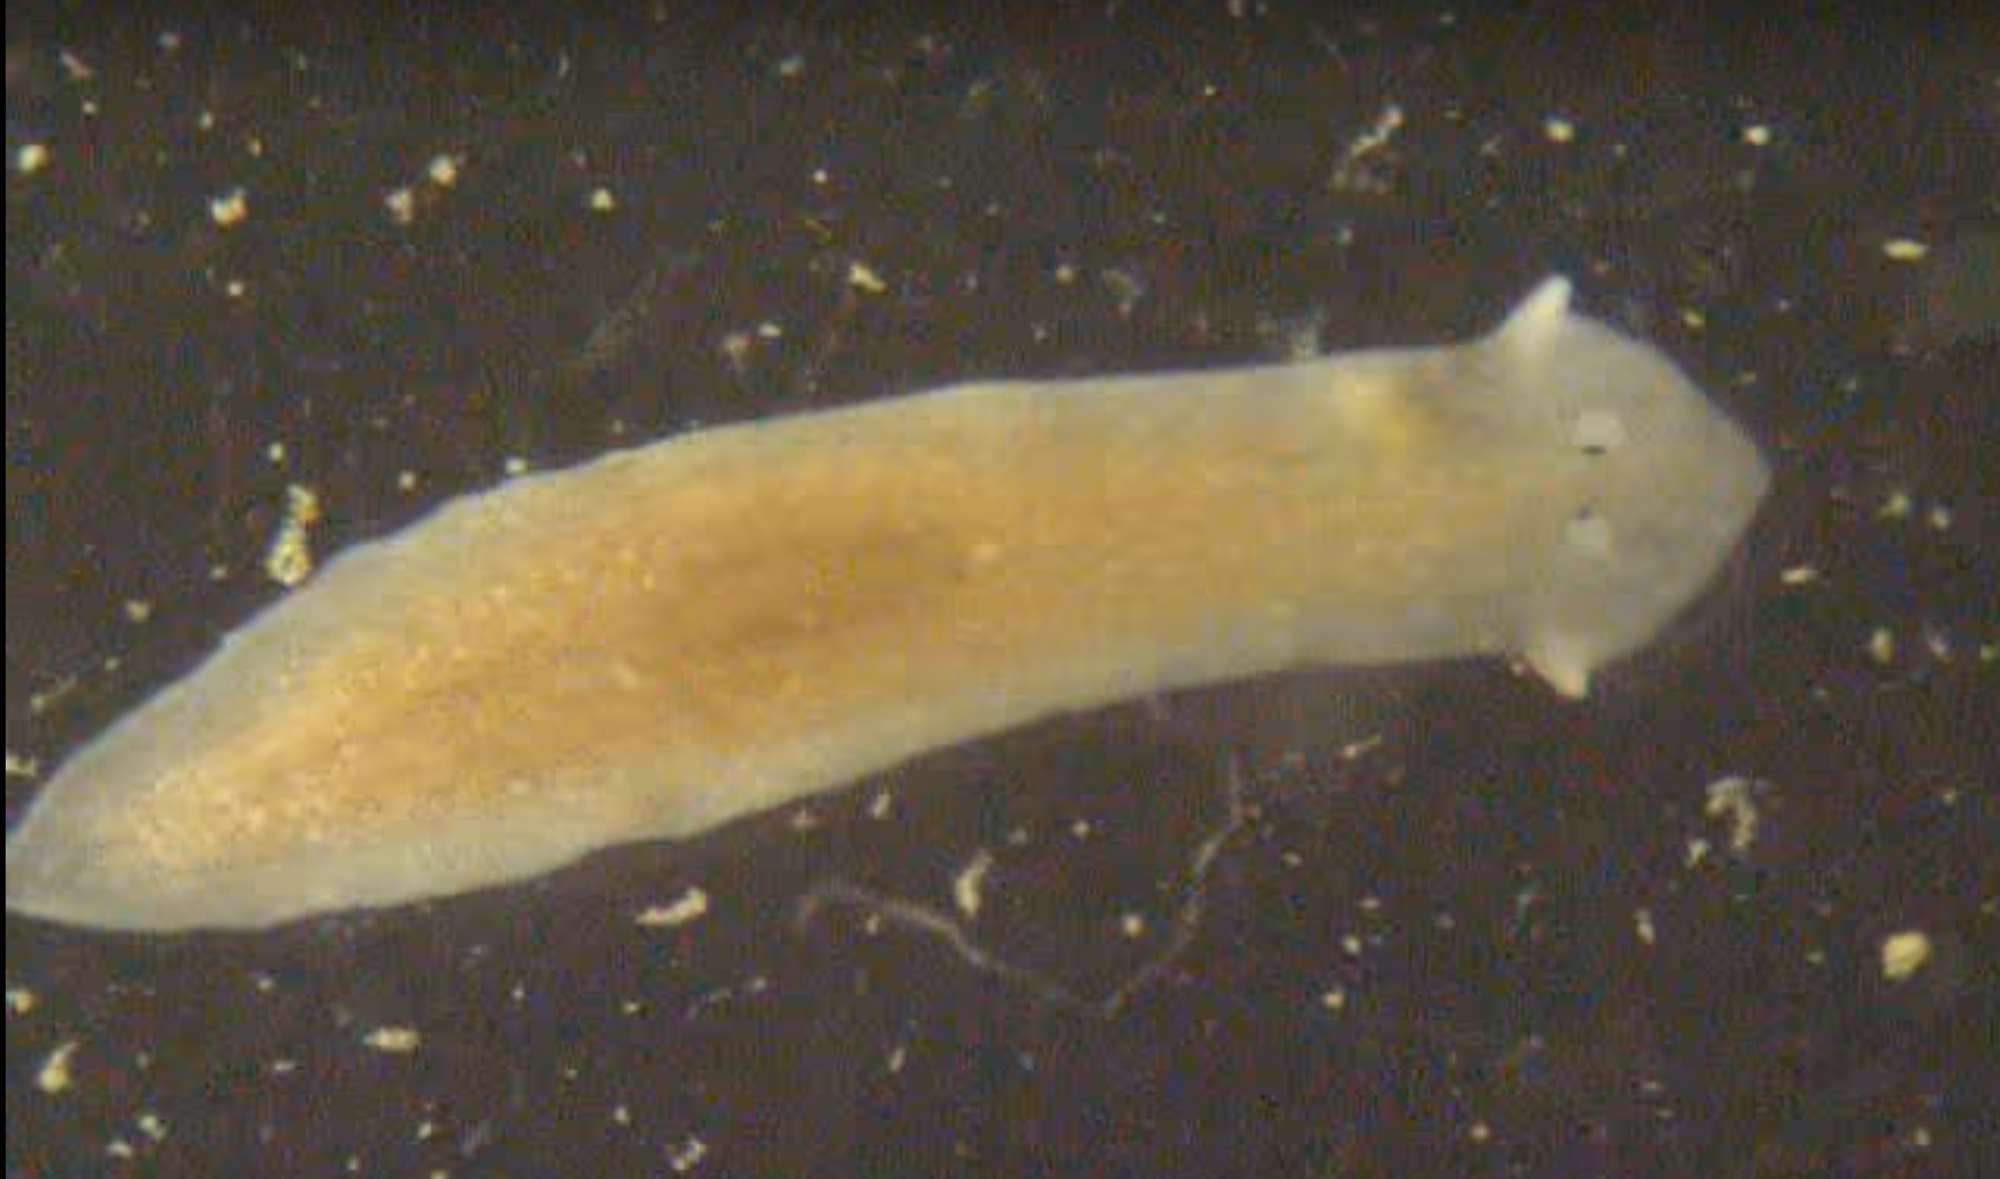 flat headed worm